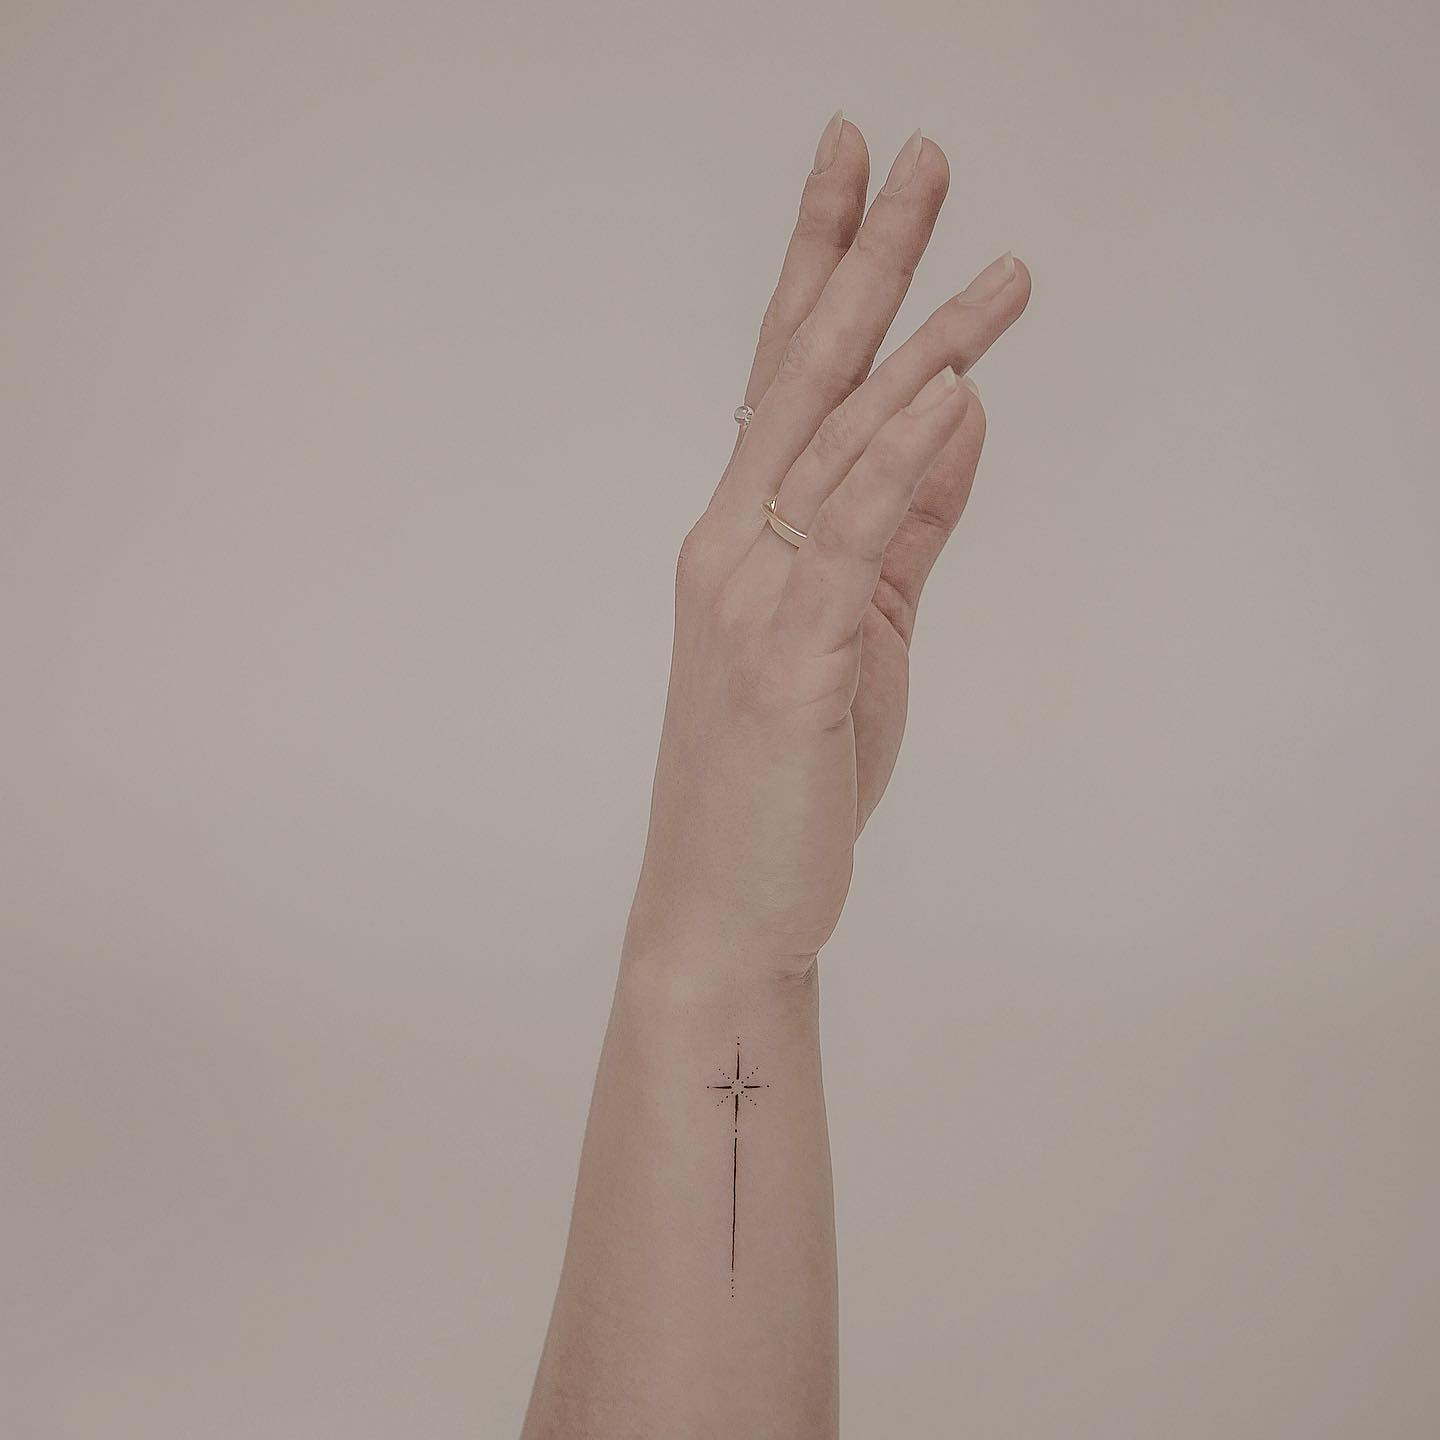 Shooting star tattoo by lucas.dauner